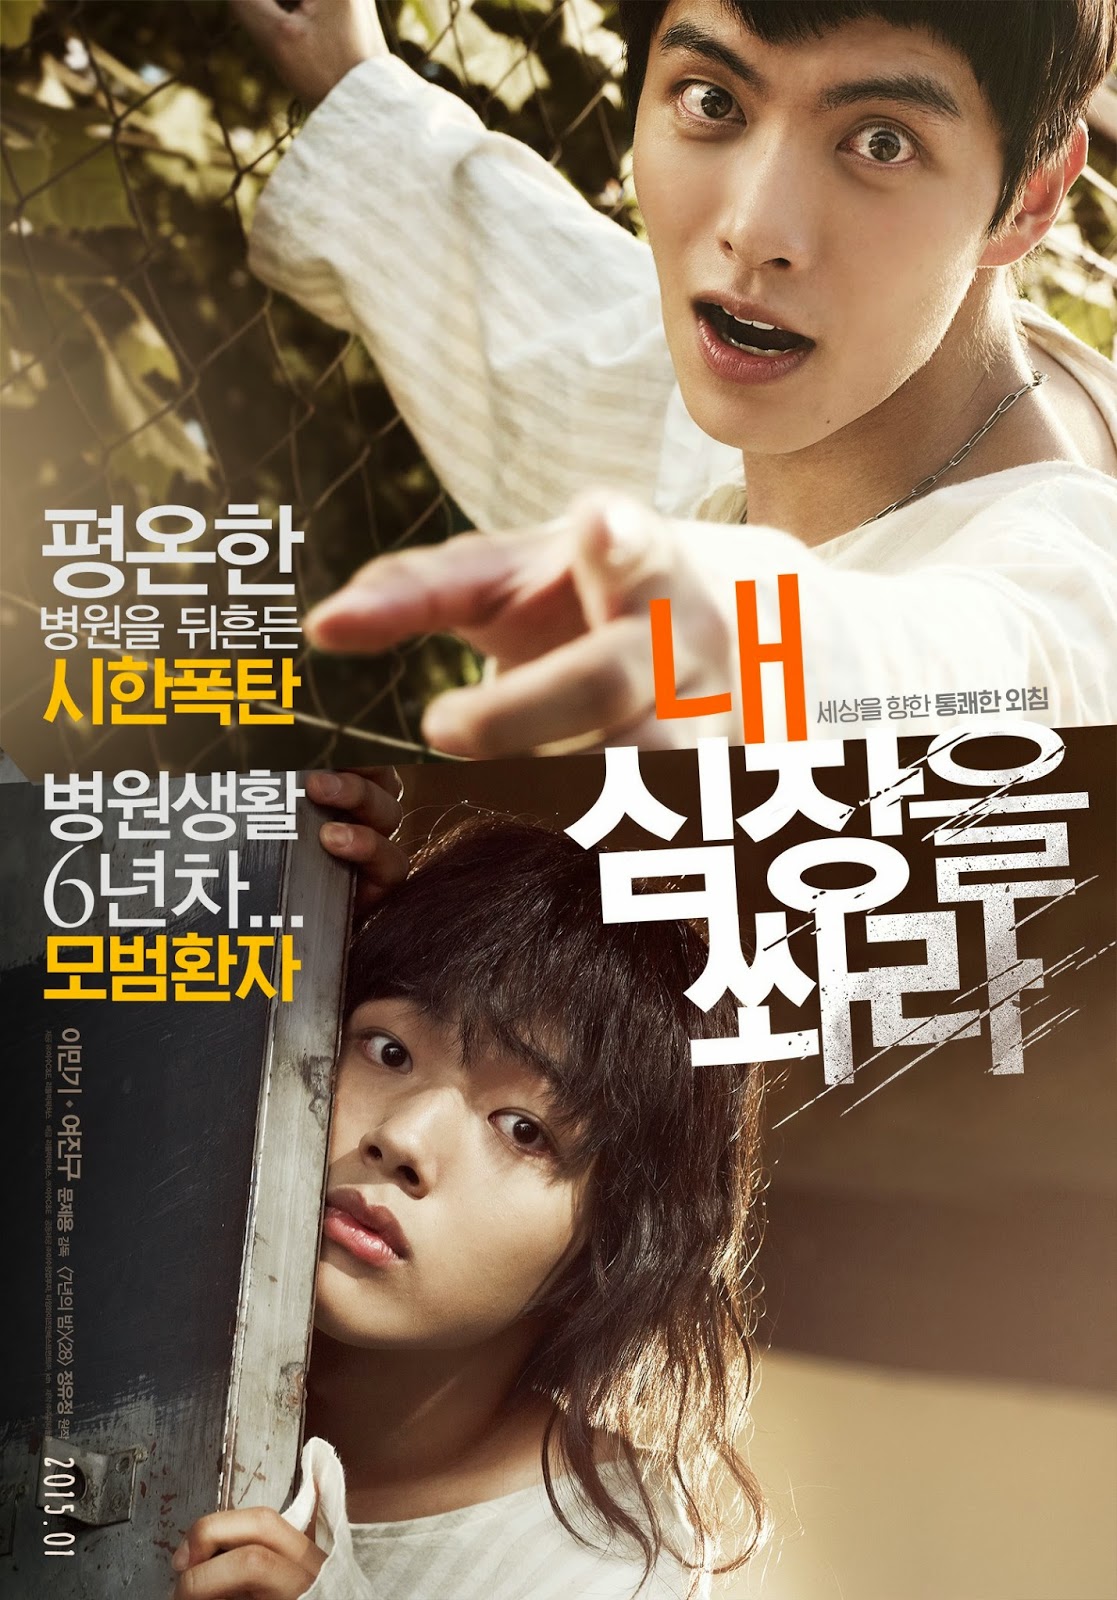 Shoot My Heart Korean Movie-Jan 28, 2015 | Upcoming New Movies